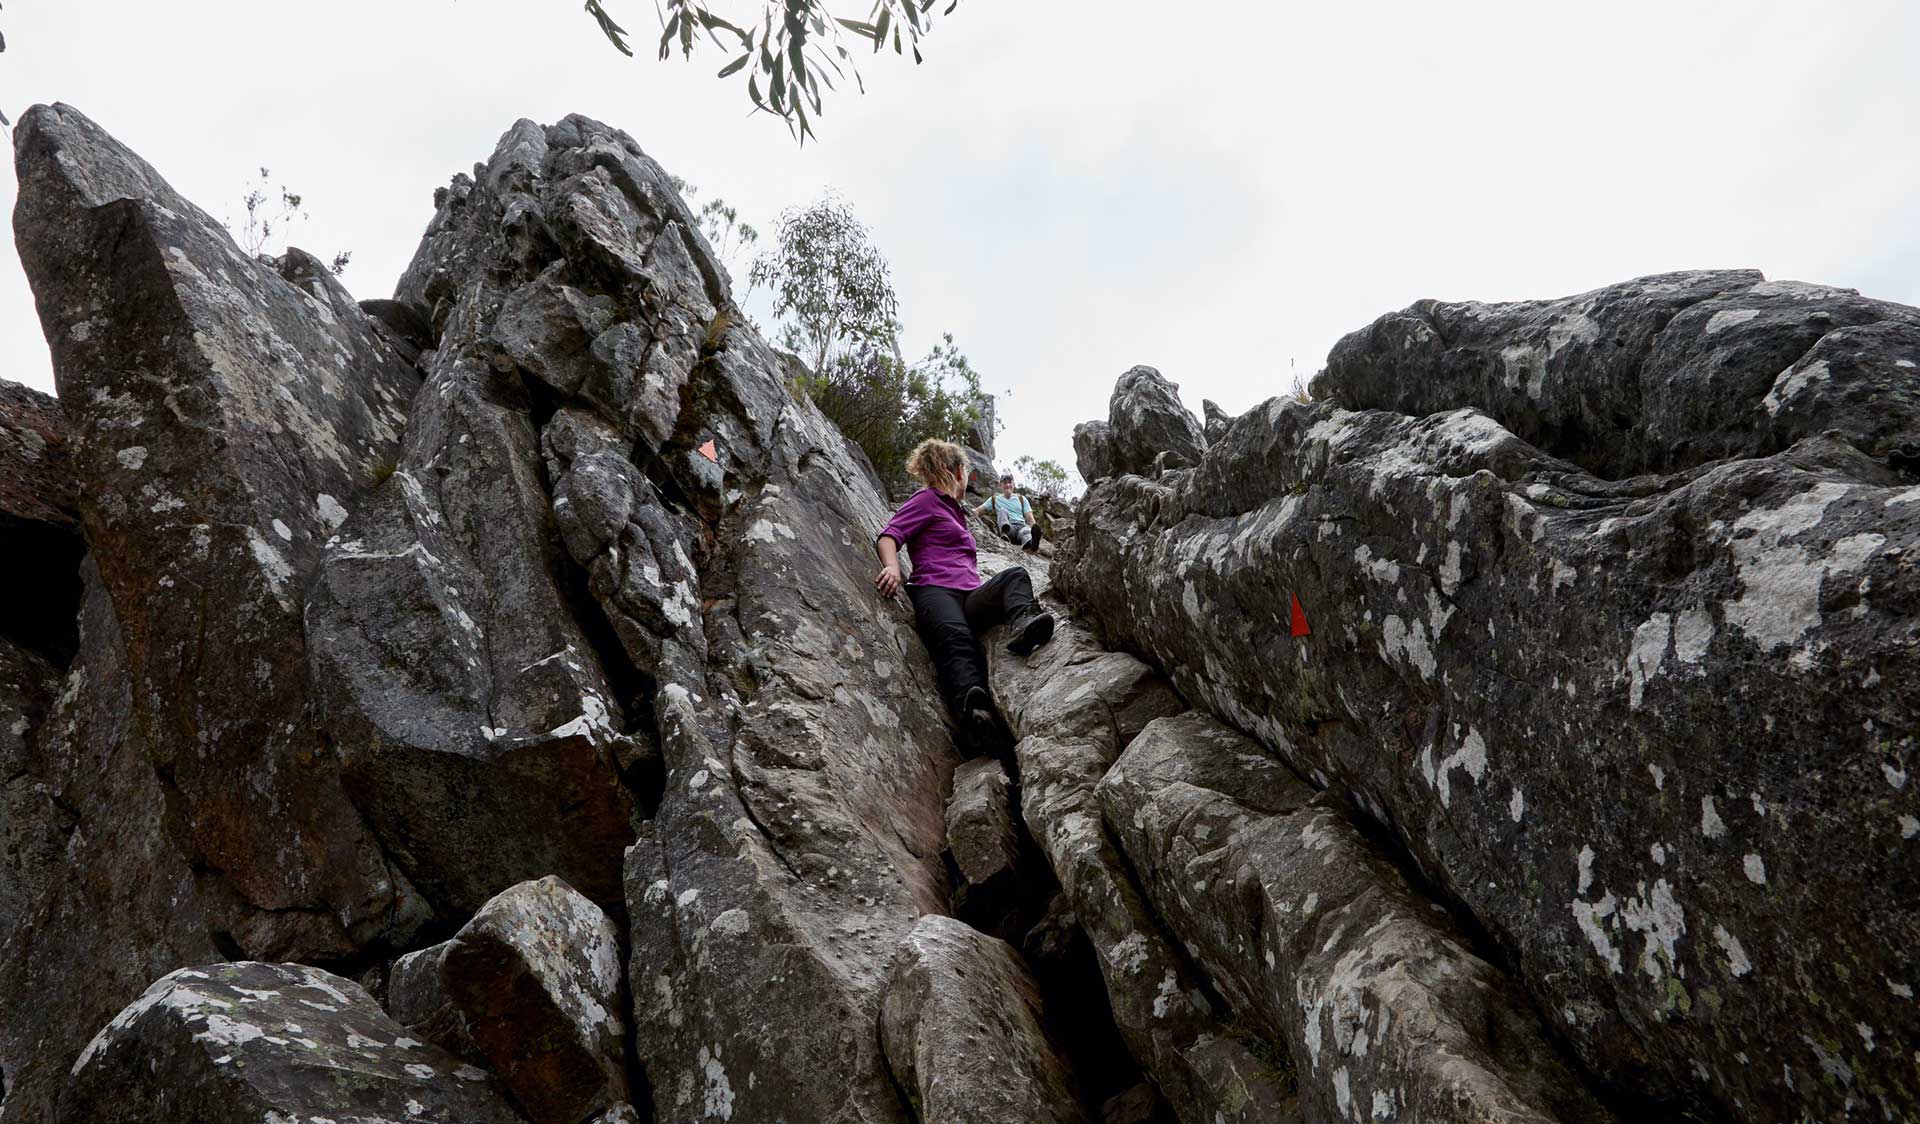 A woman in a purple shirt scrambles up through rocky terrain along the path.